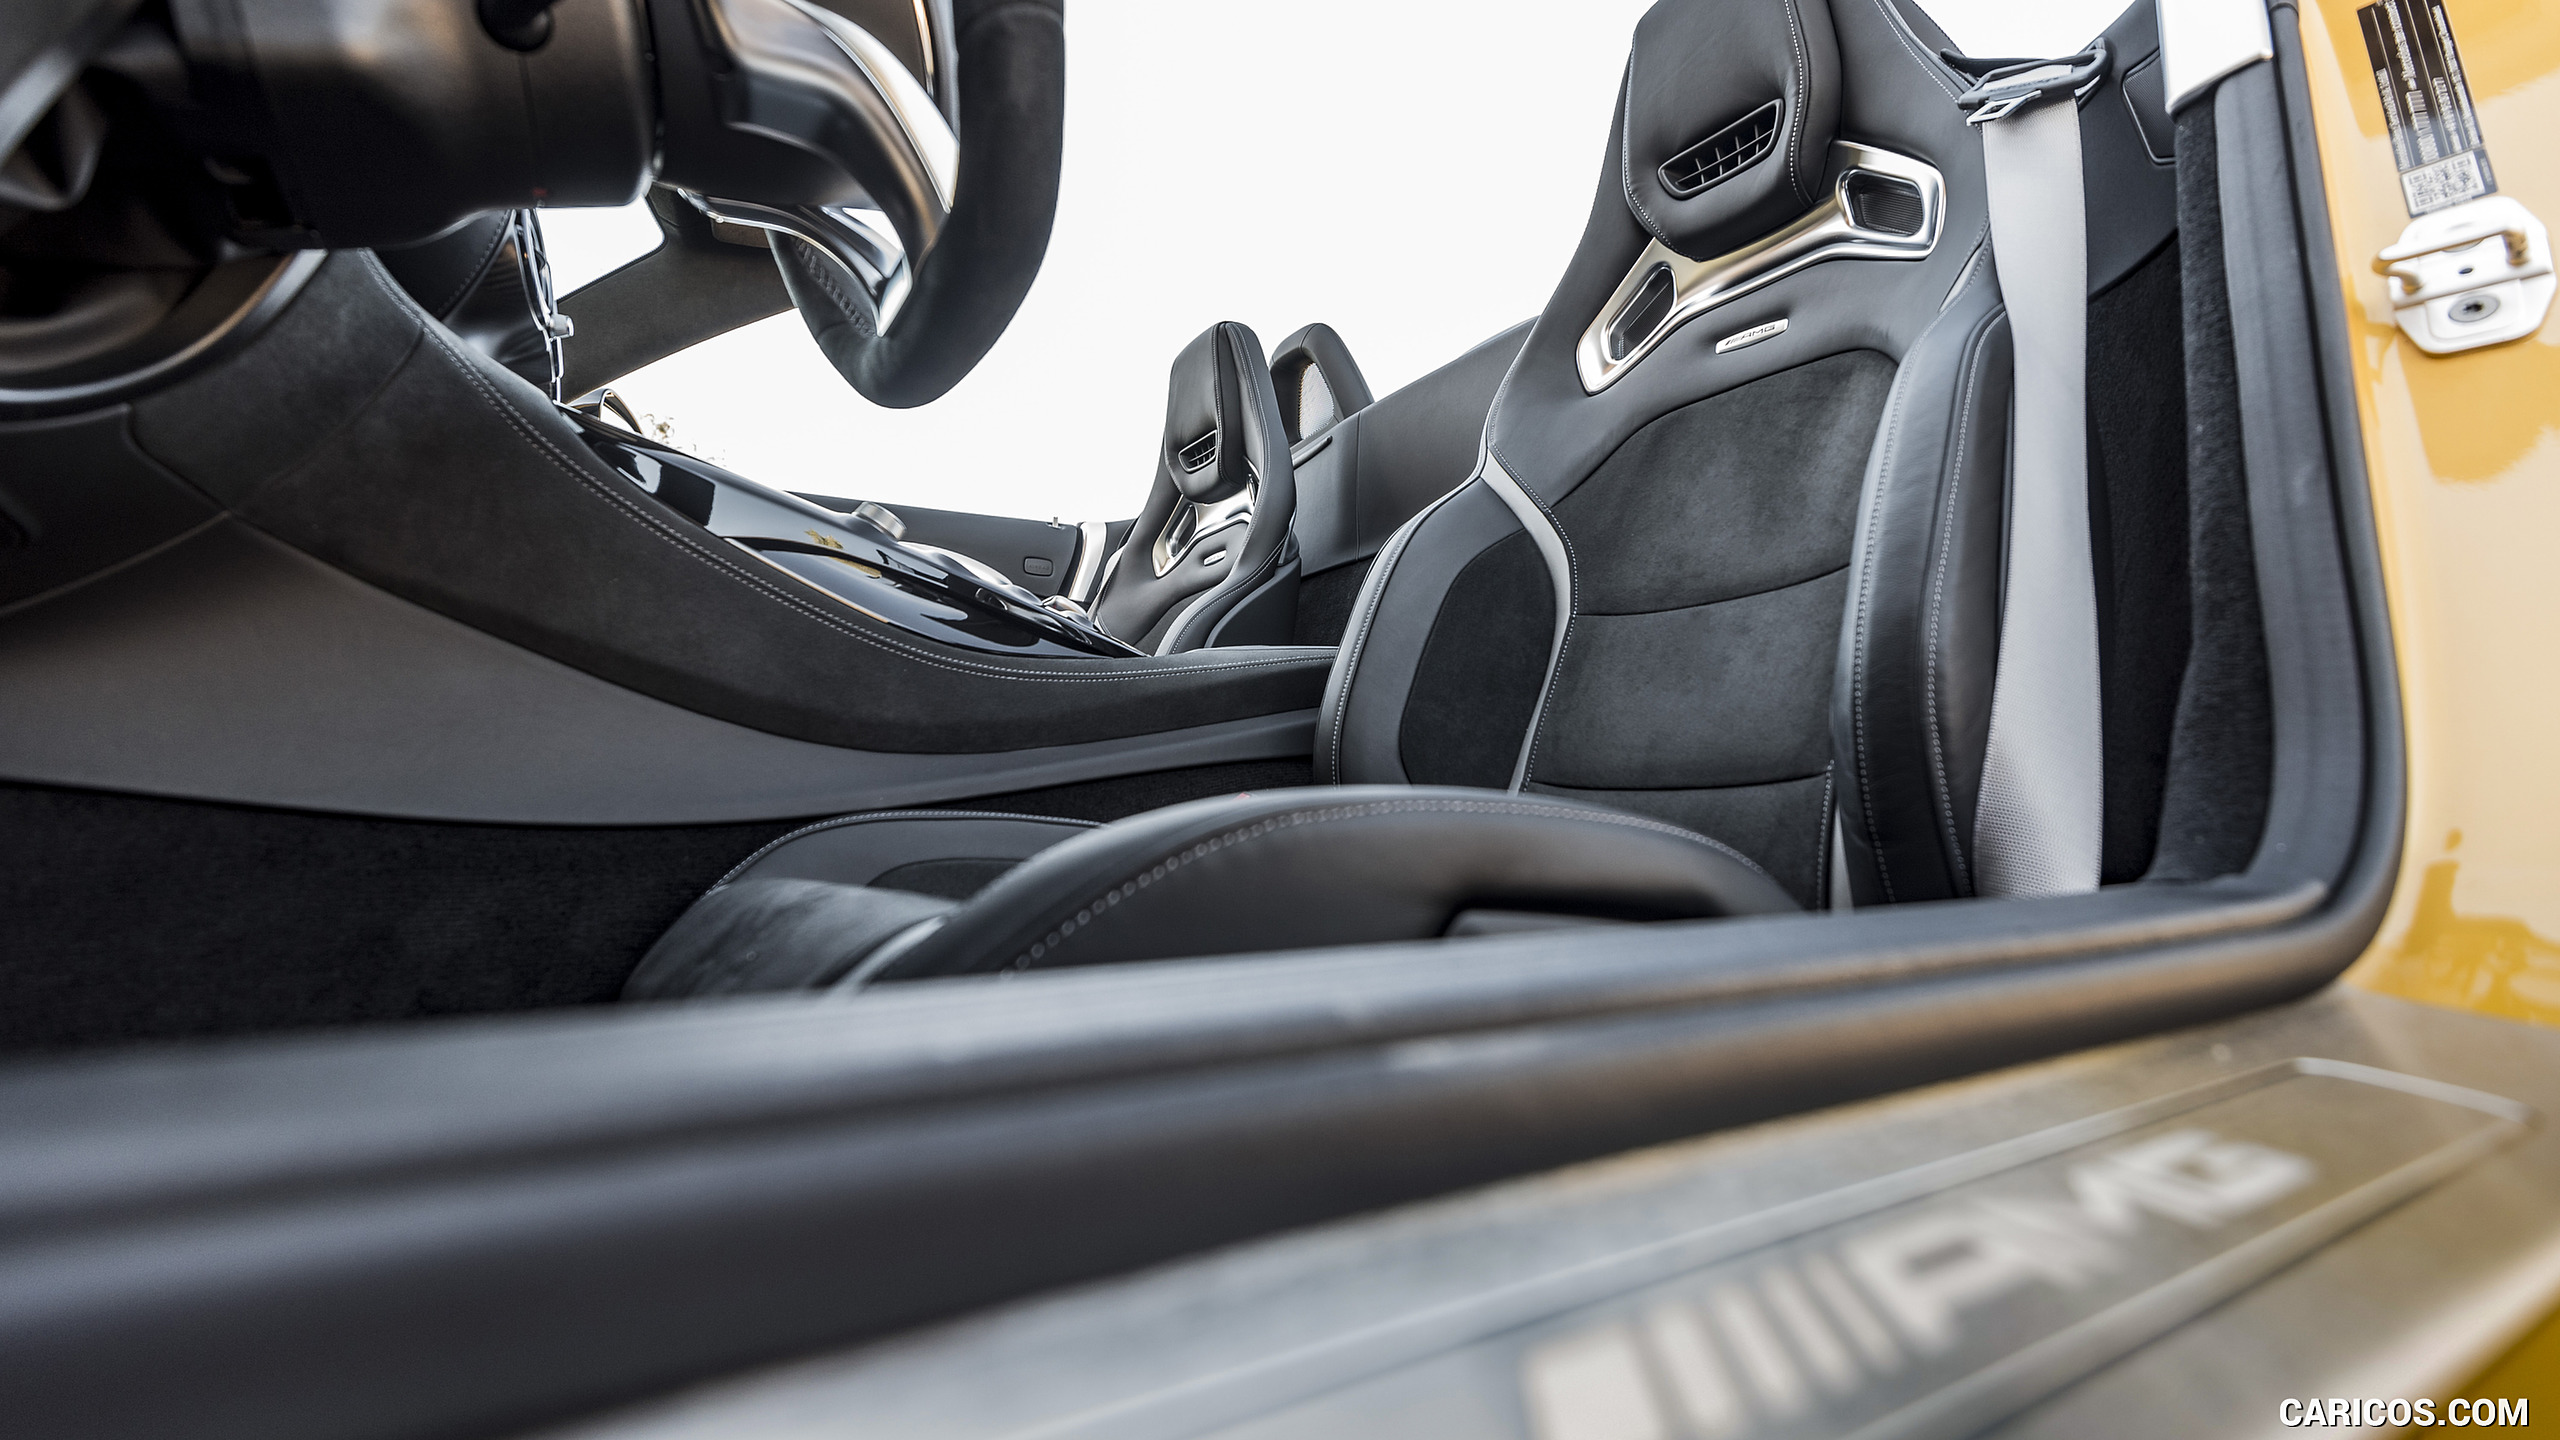 2018 Mercedes-AMG GT C Roadster - Interior, Seats, #267 of 350